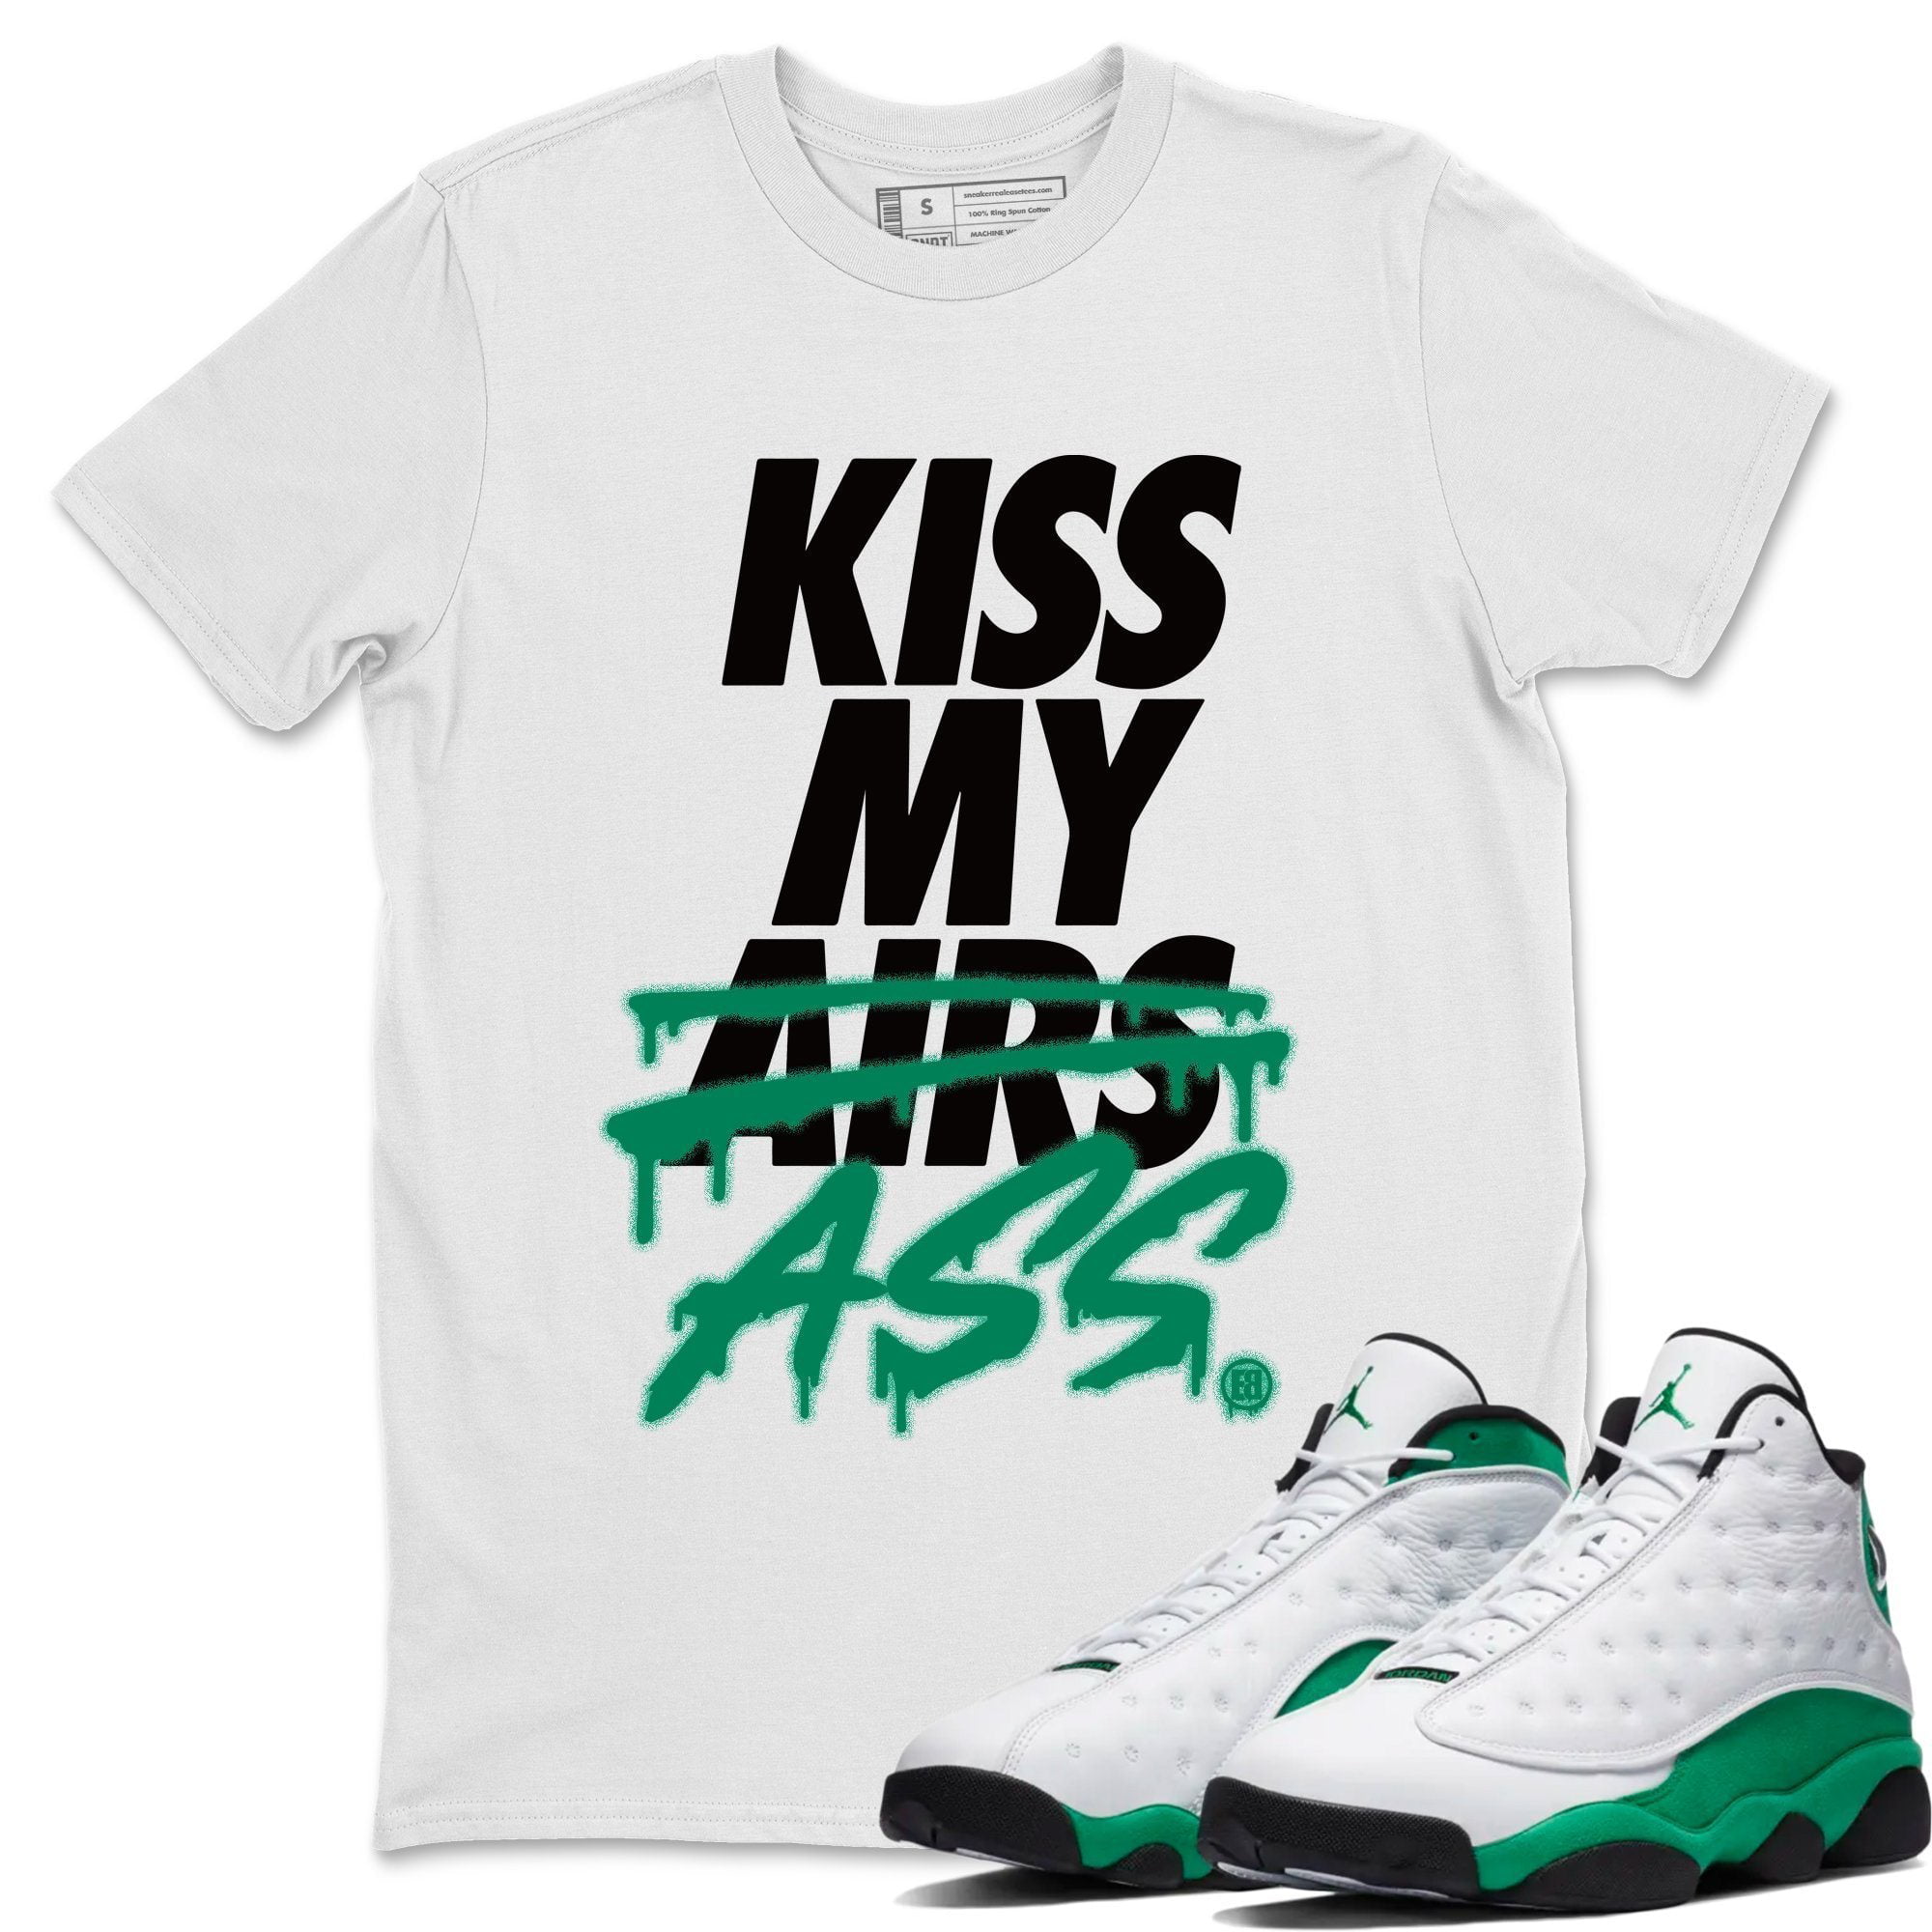 green and white jordan 13 shirt